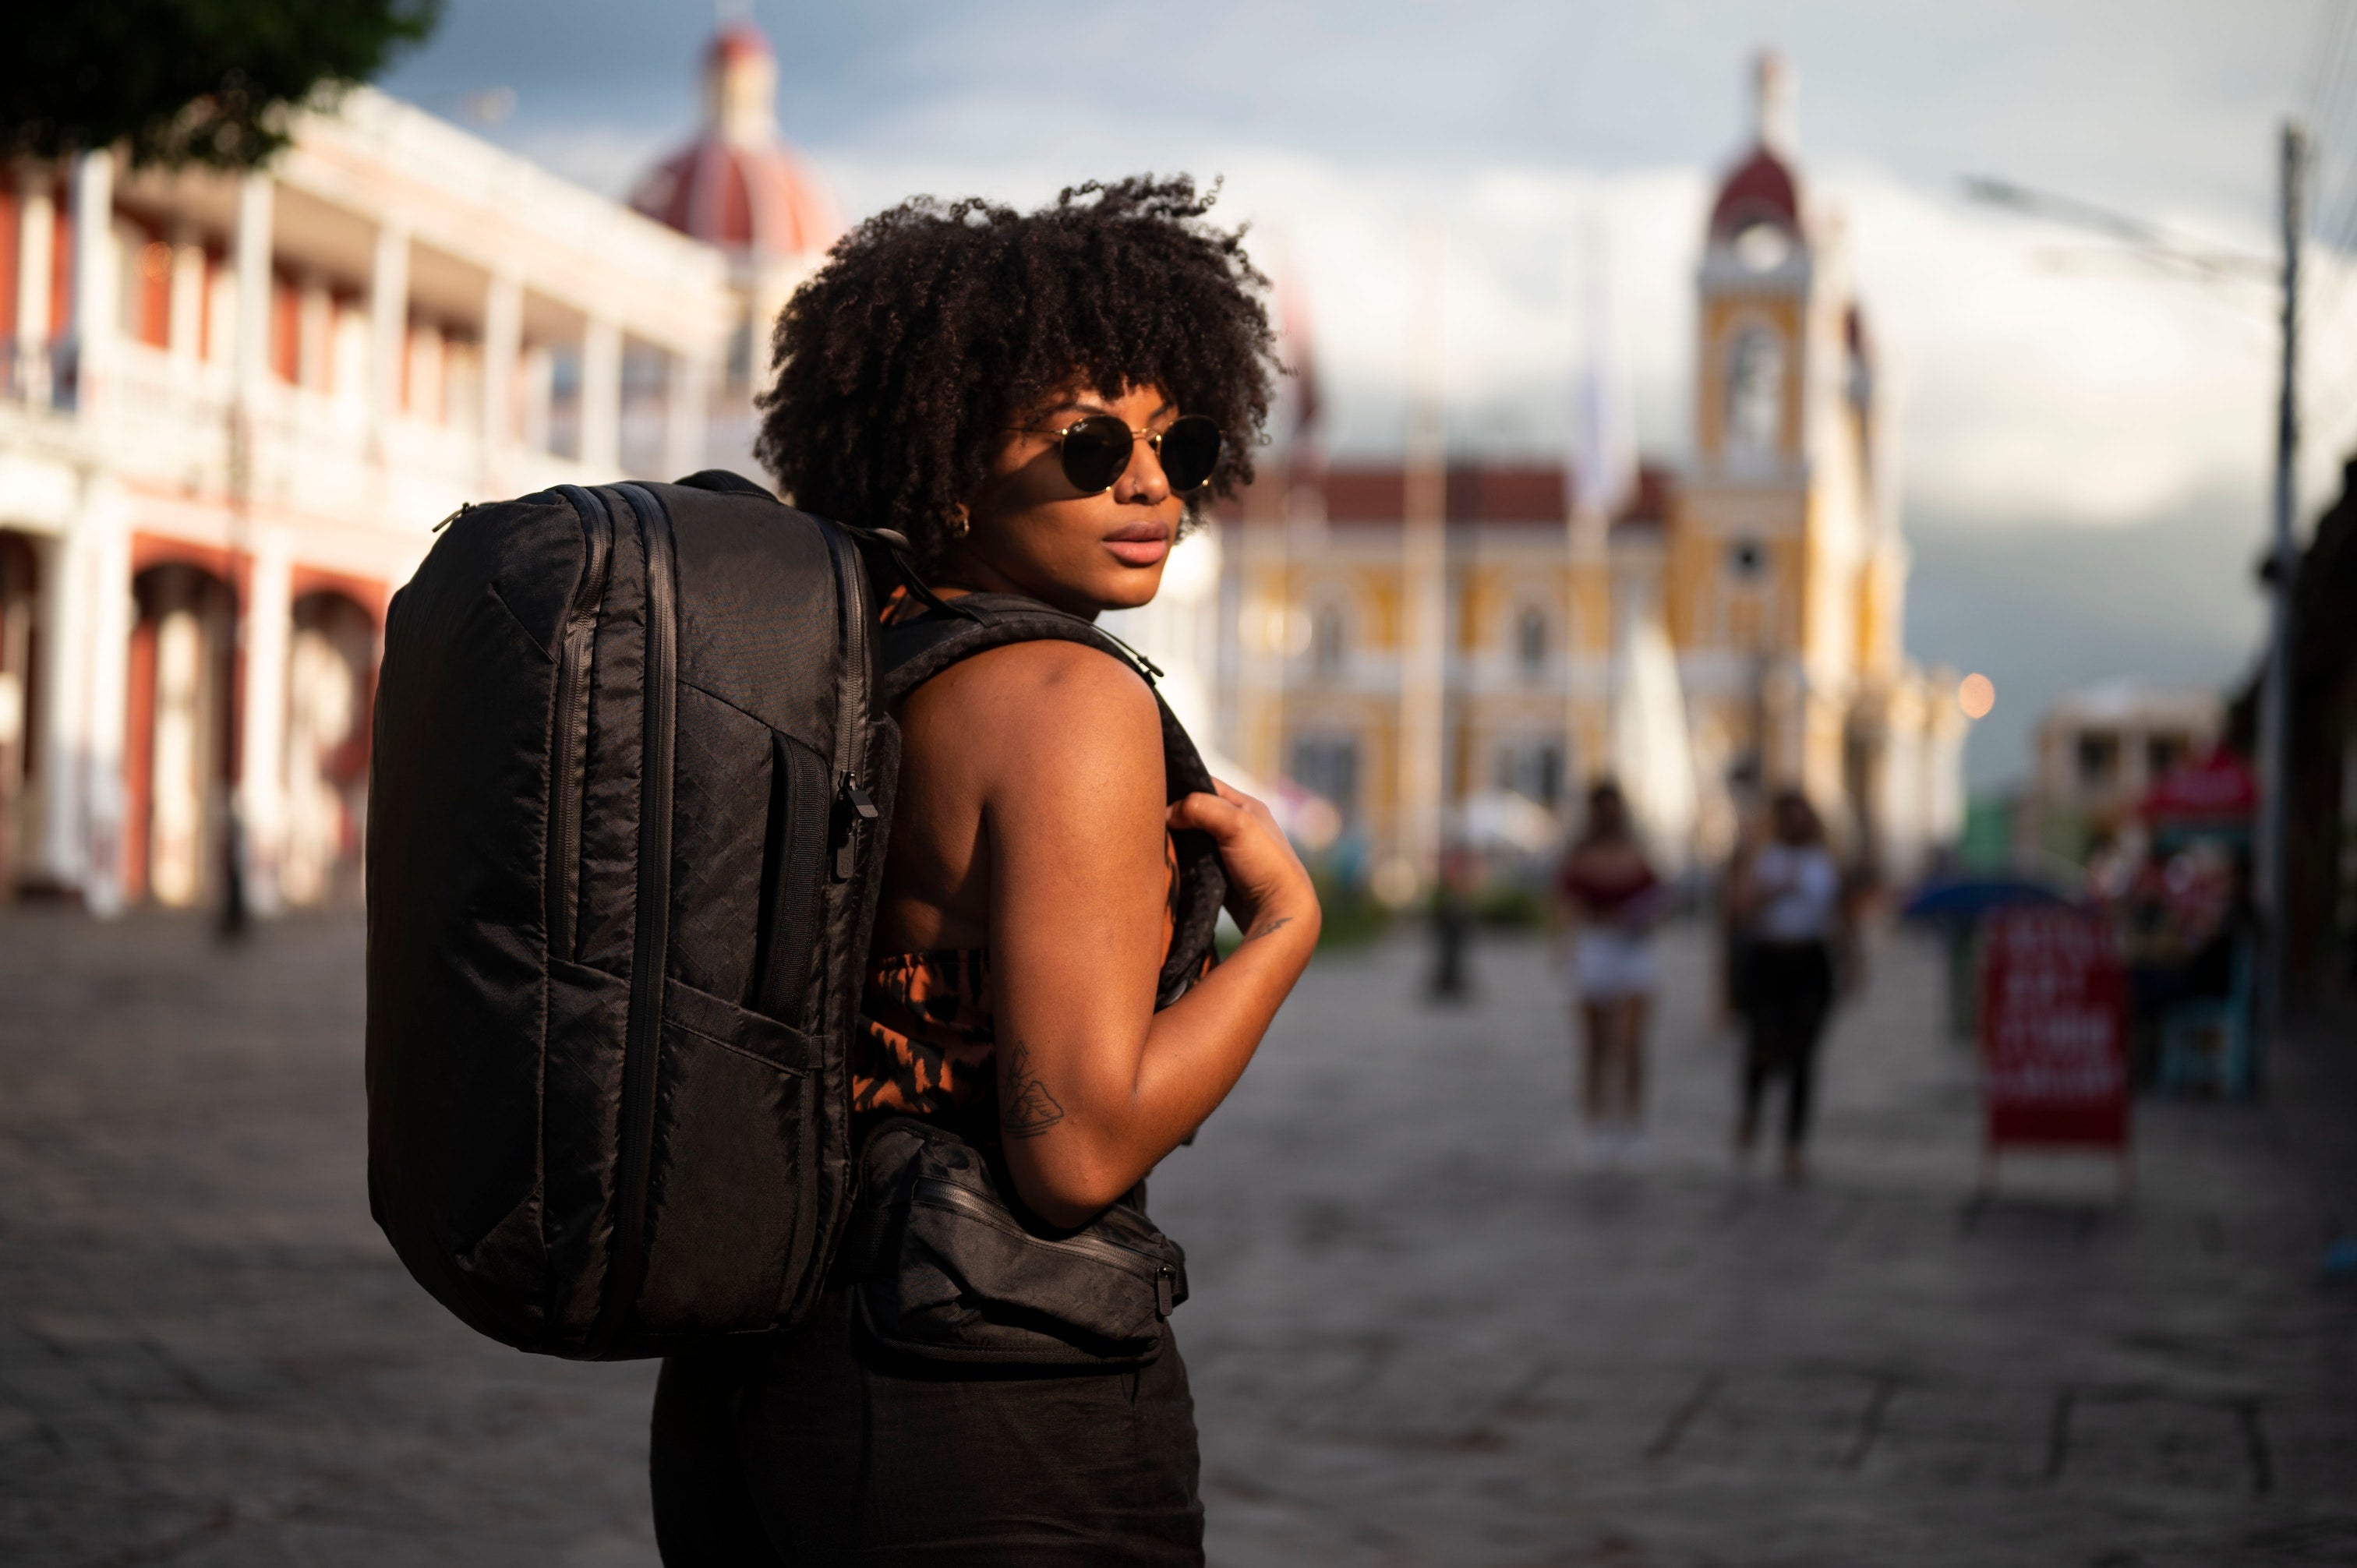  Large Backpack for Women Travel Bag, Luggage Backpack